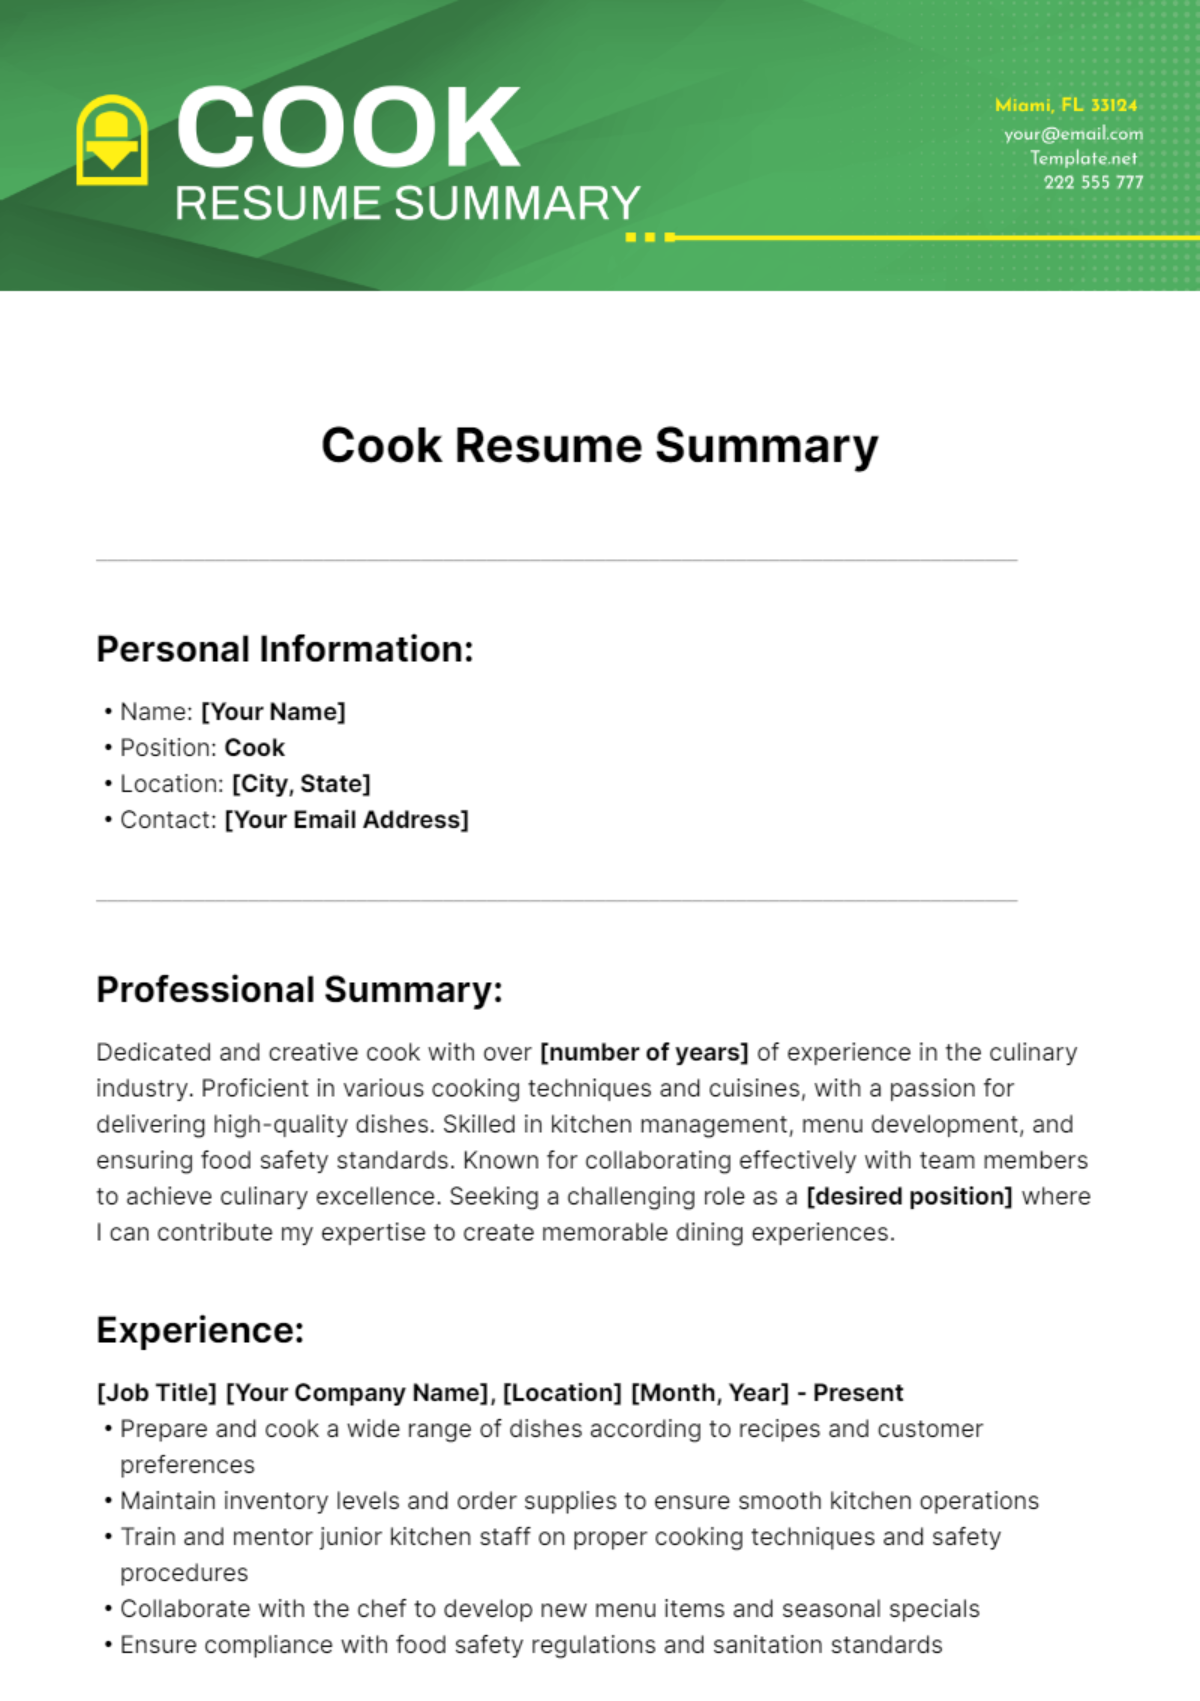 Cook Resume Summary Template